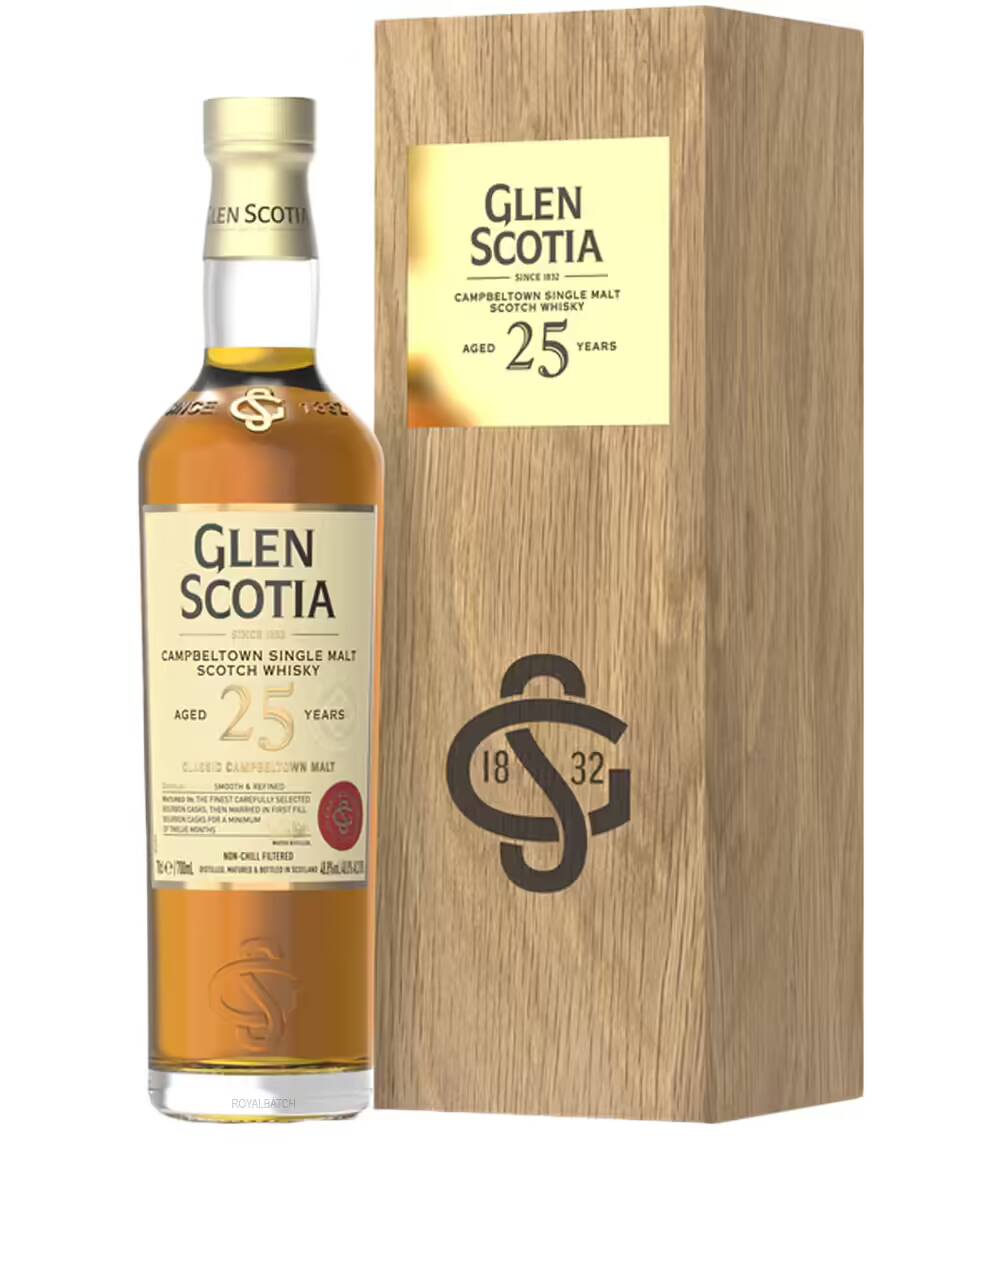 Glen Scotia Campbeltown 25 year old Single malt Scotch Whisky